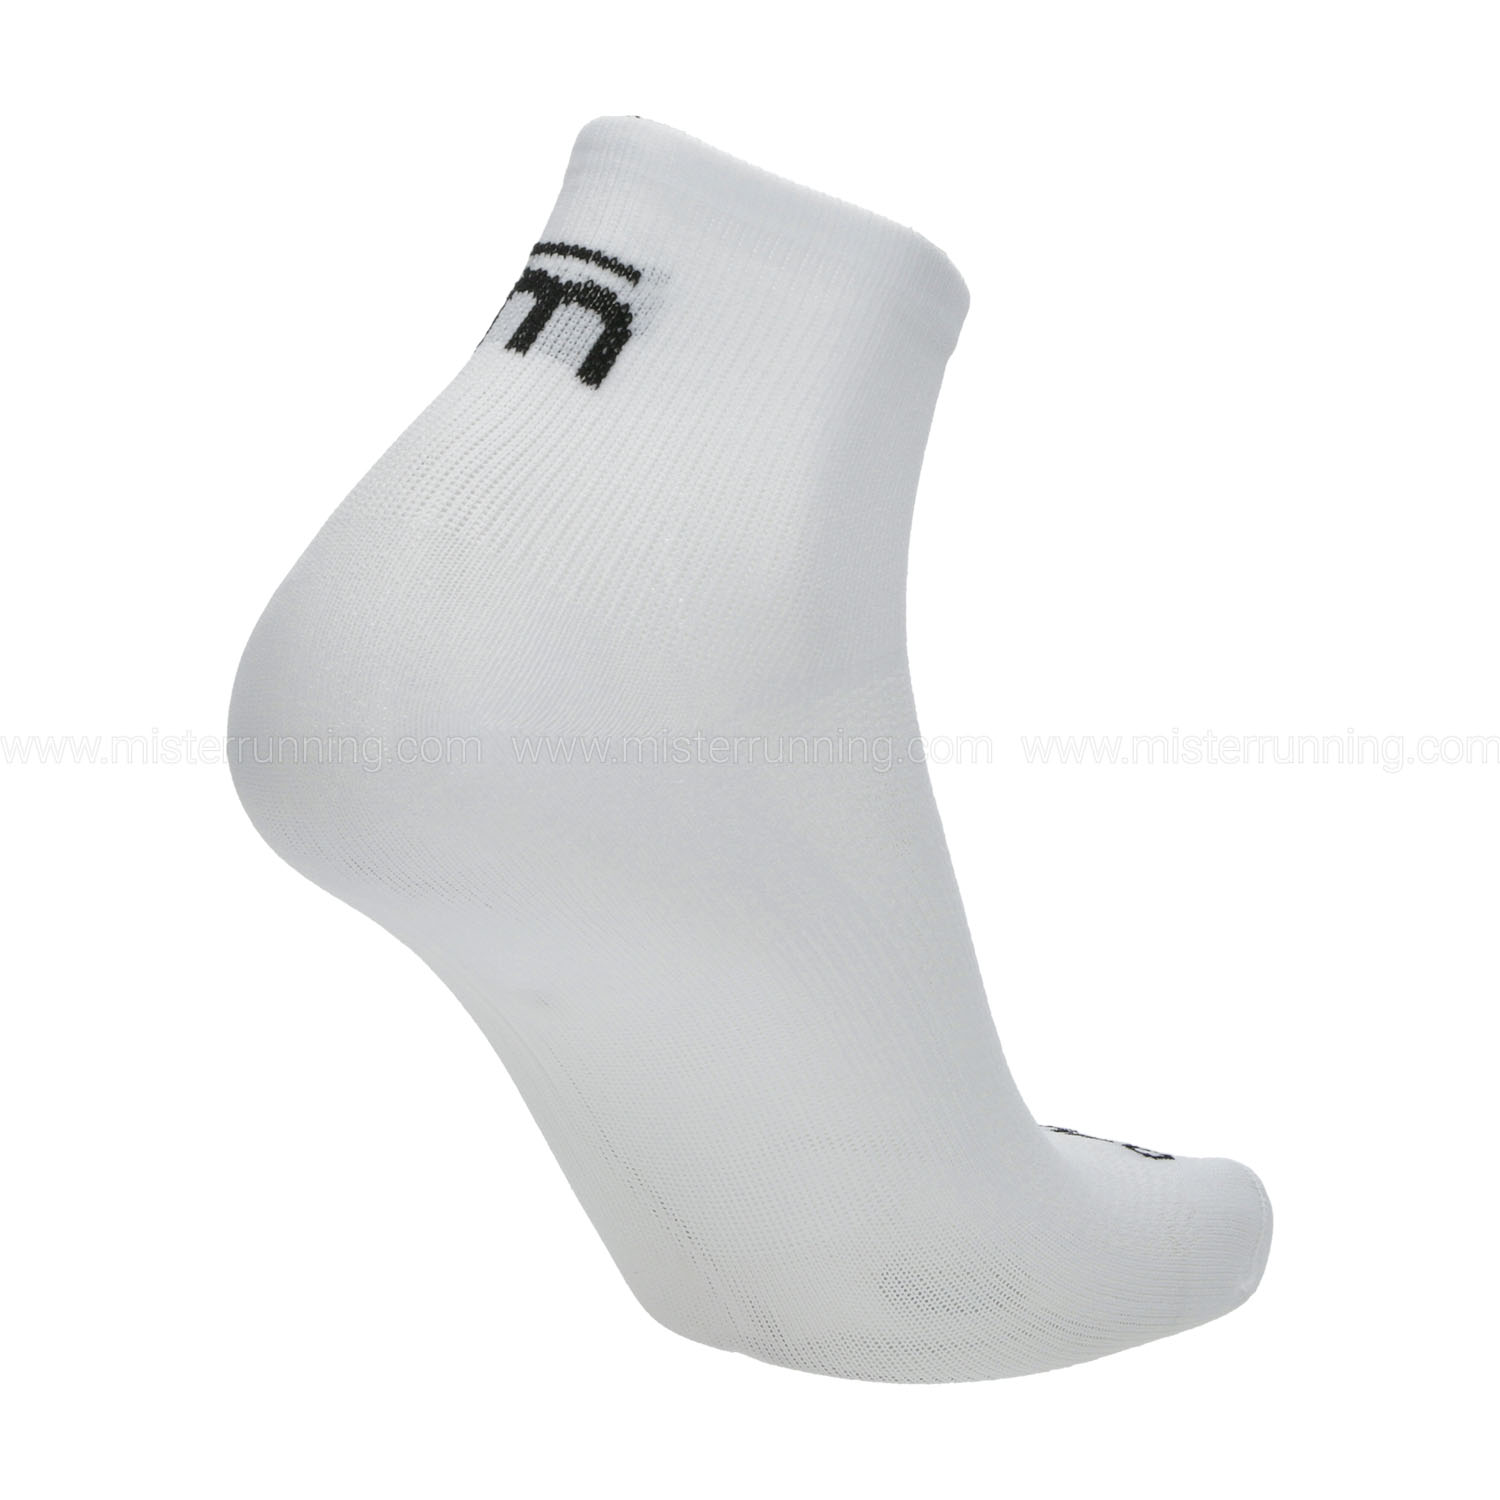 Mico Light Weight Pro x 3 Socks - Bianco